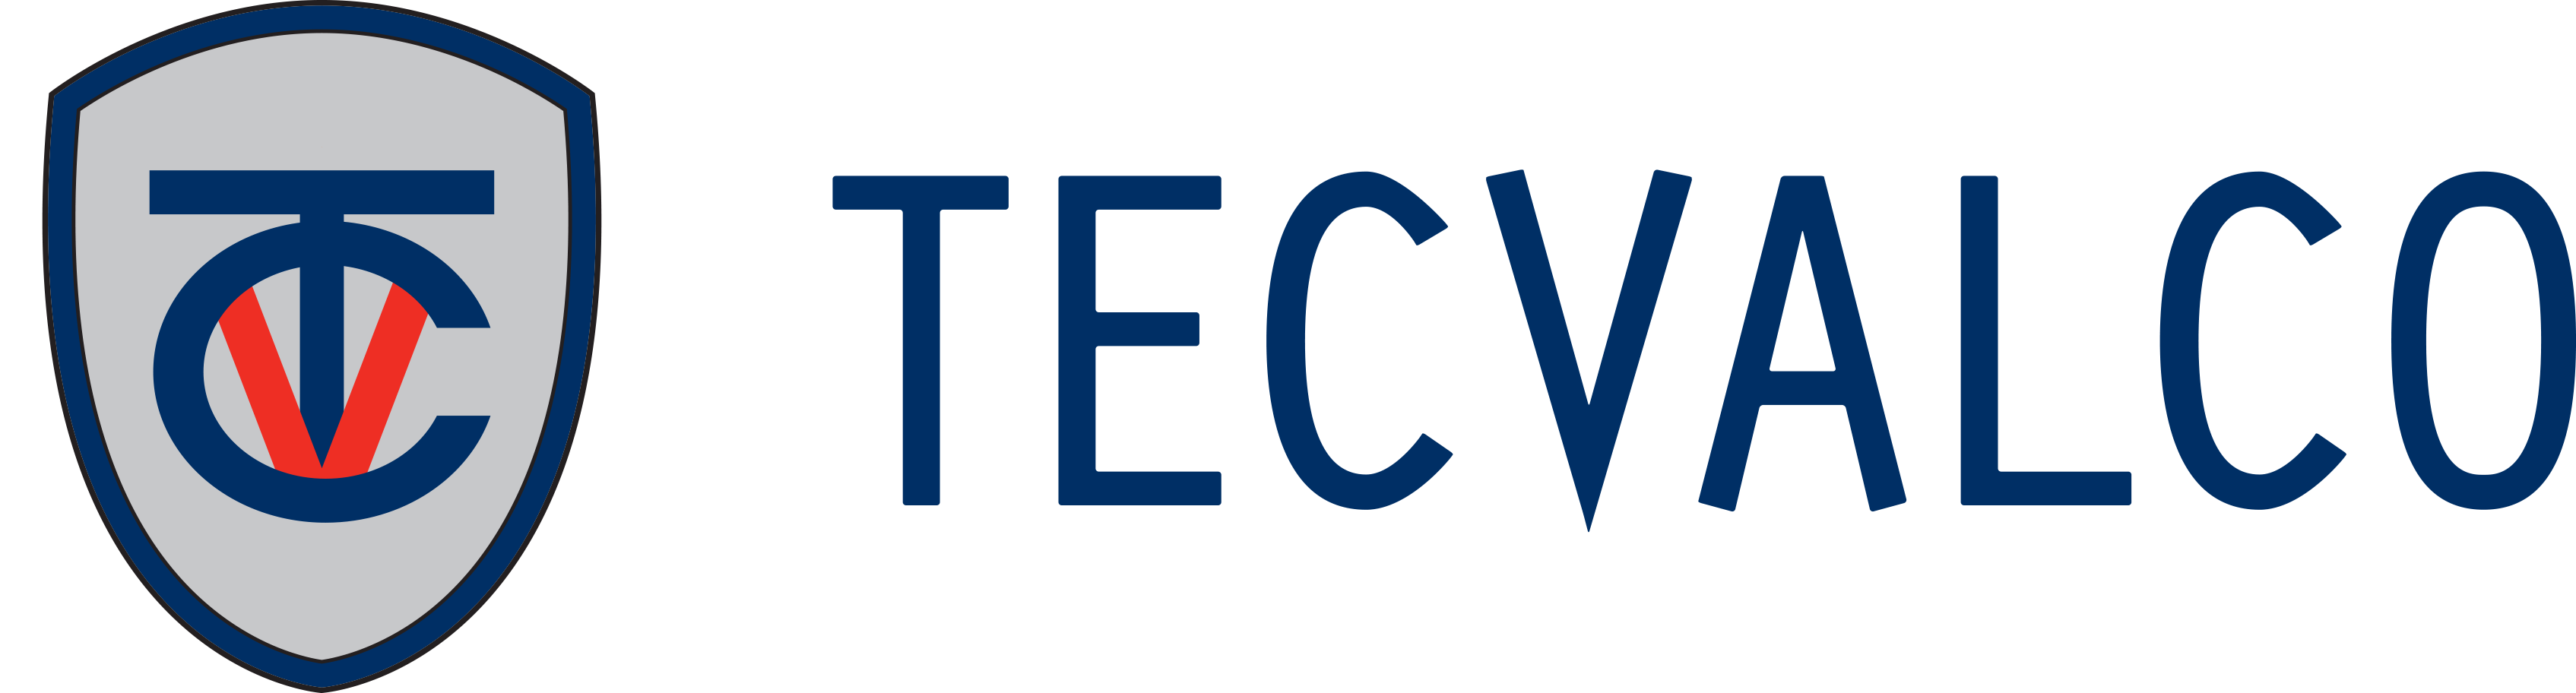 1765-tecvalco-logo-2017-horizontal-spot-colour-16442595601111.png